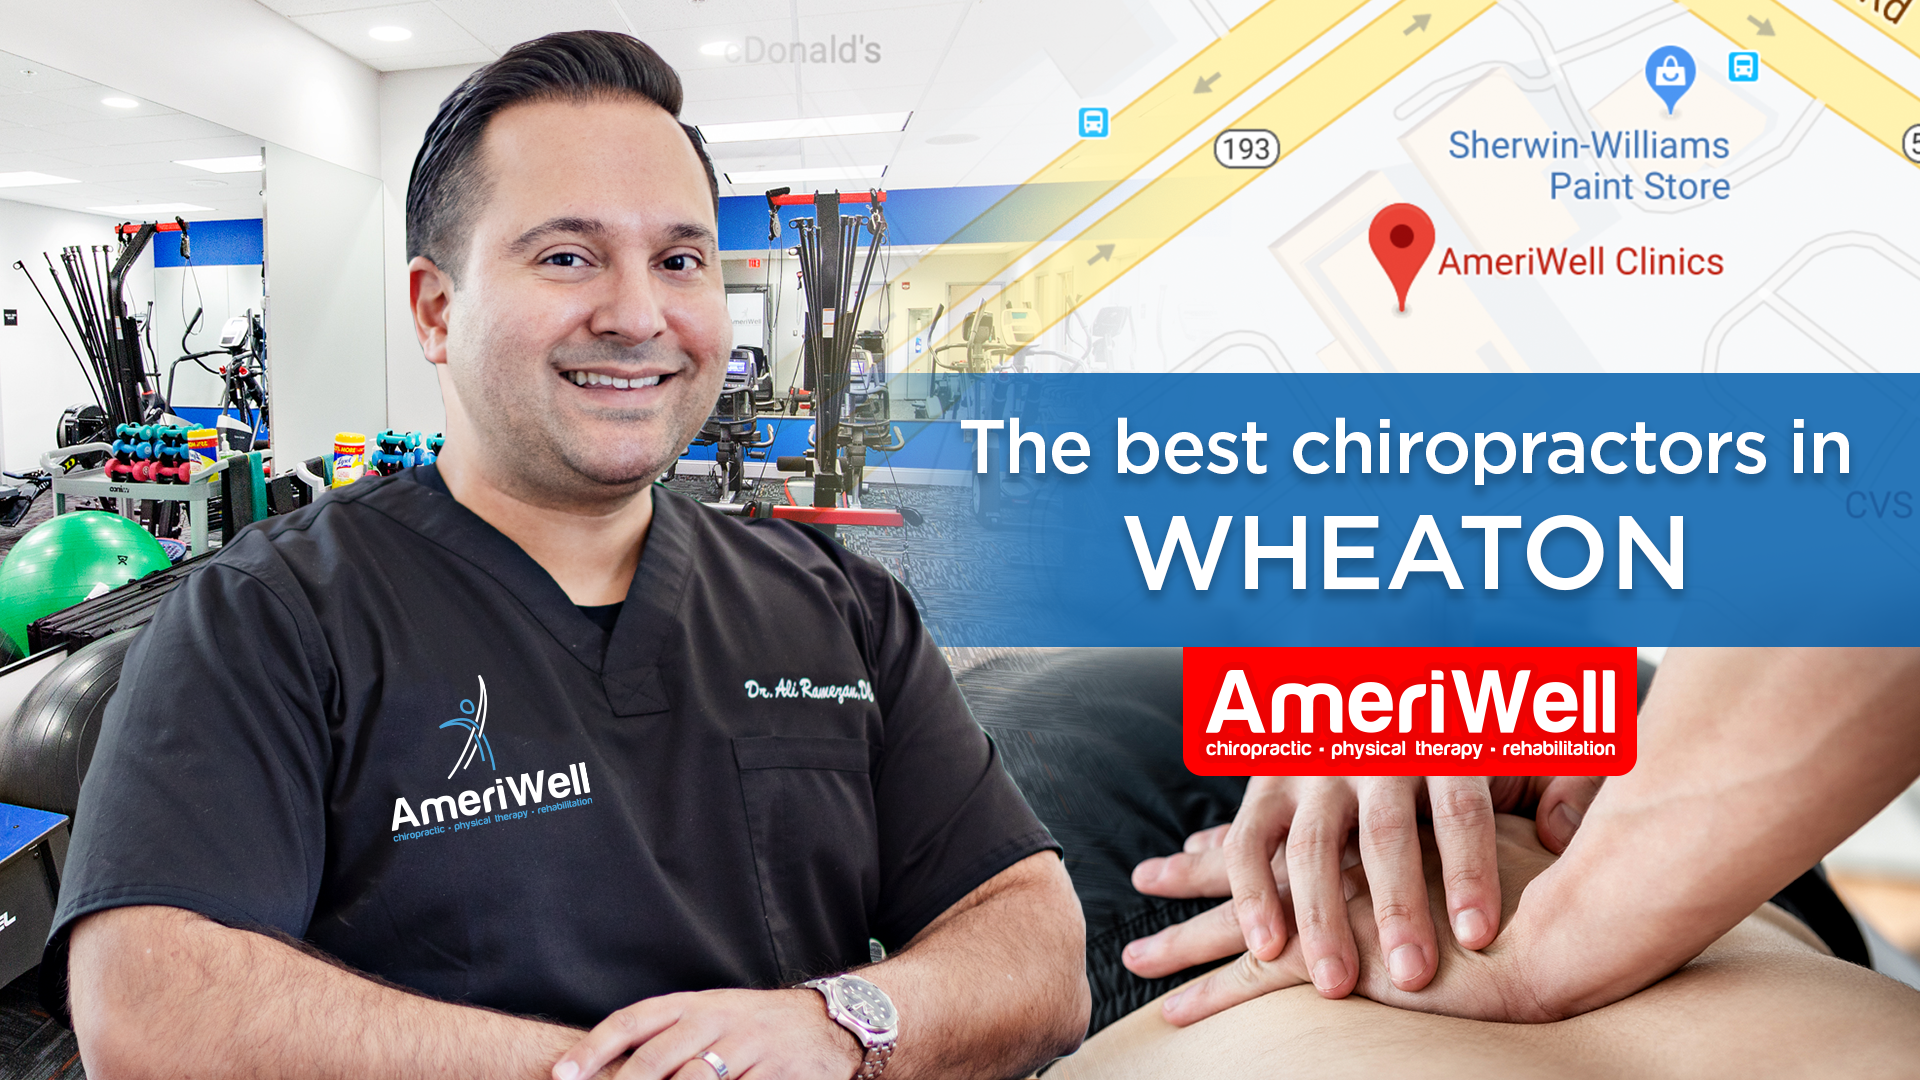 Wheaton - Ameriwell Clinics the best chiropractors